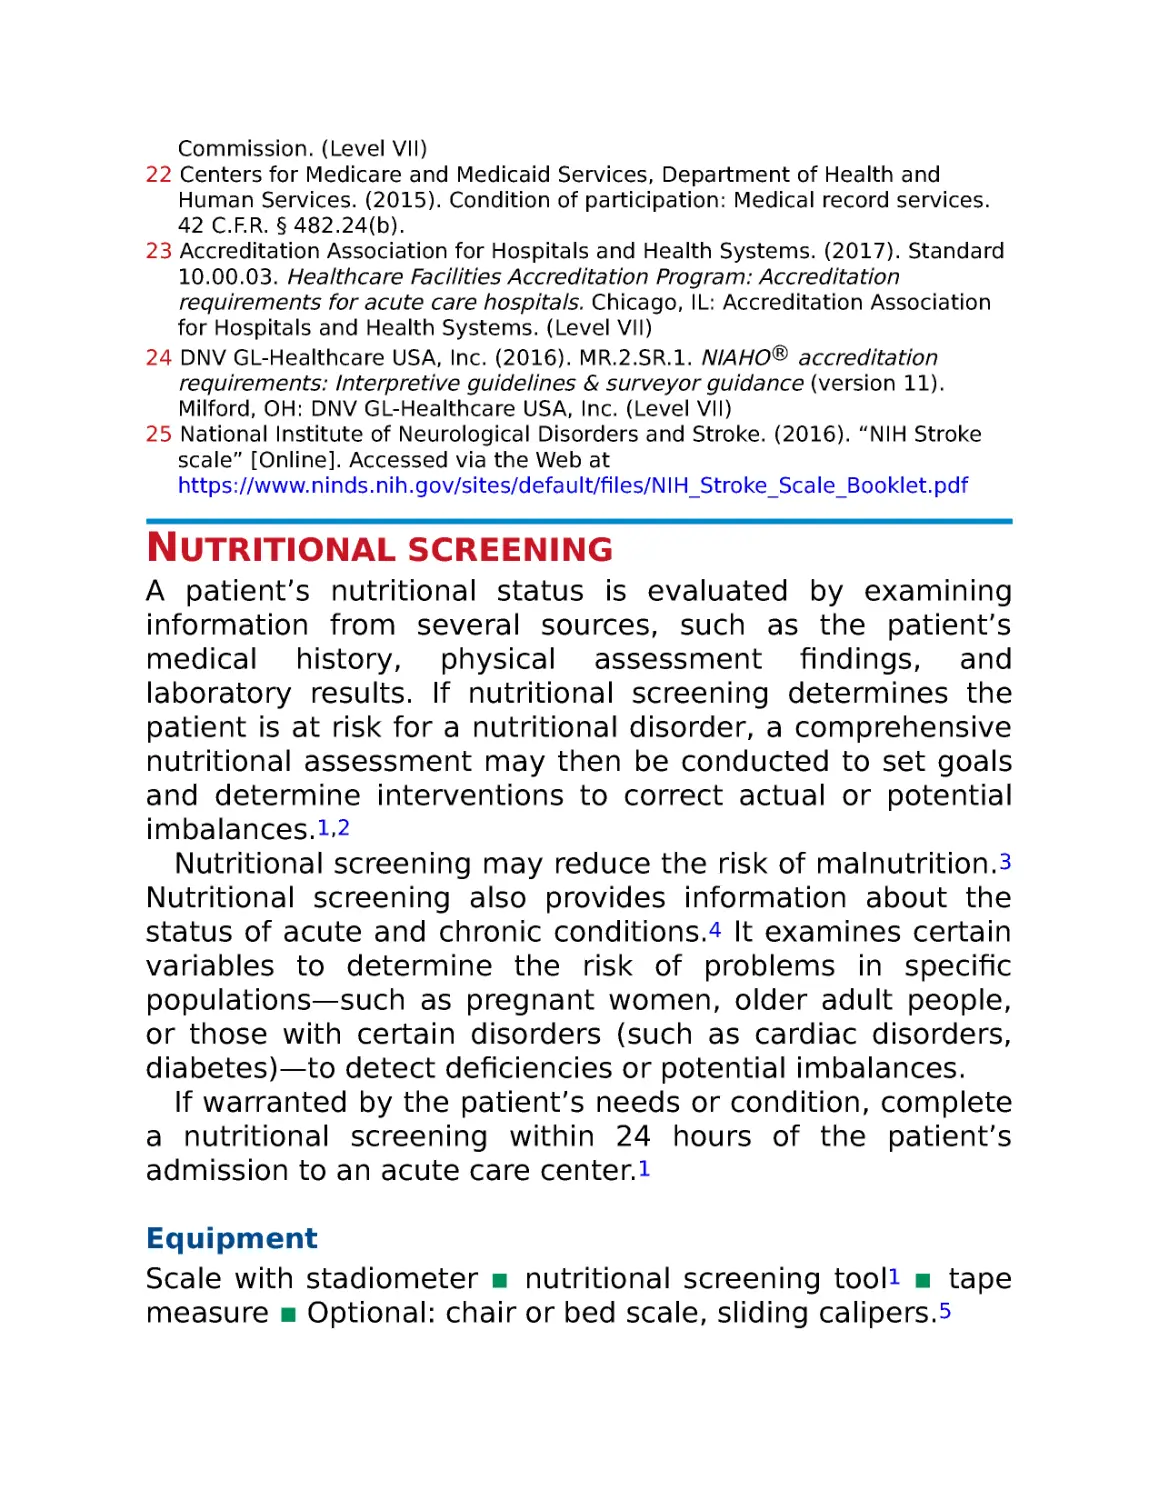 Nutritional screening